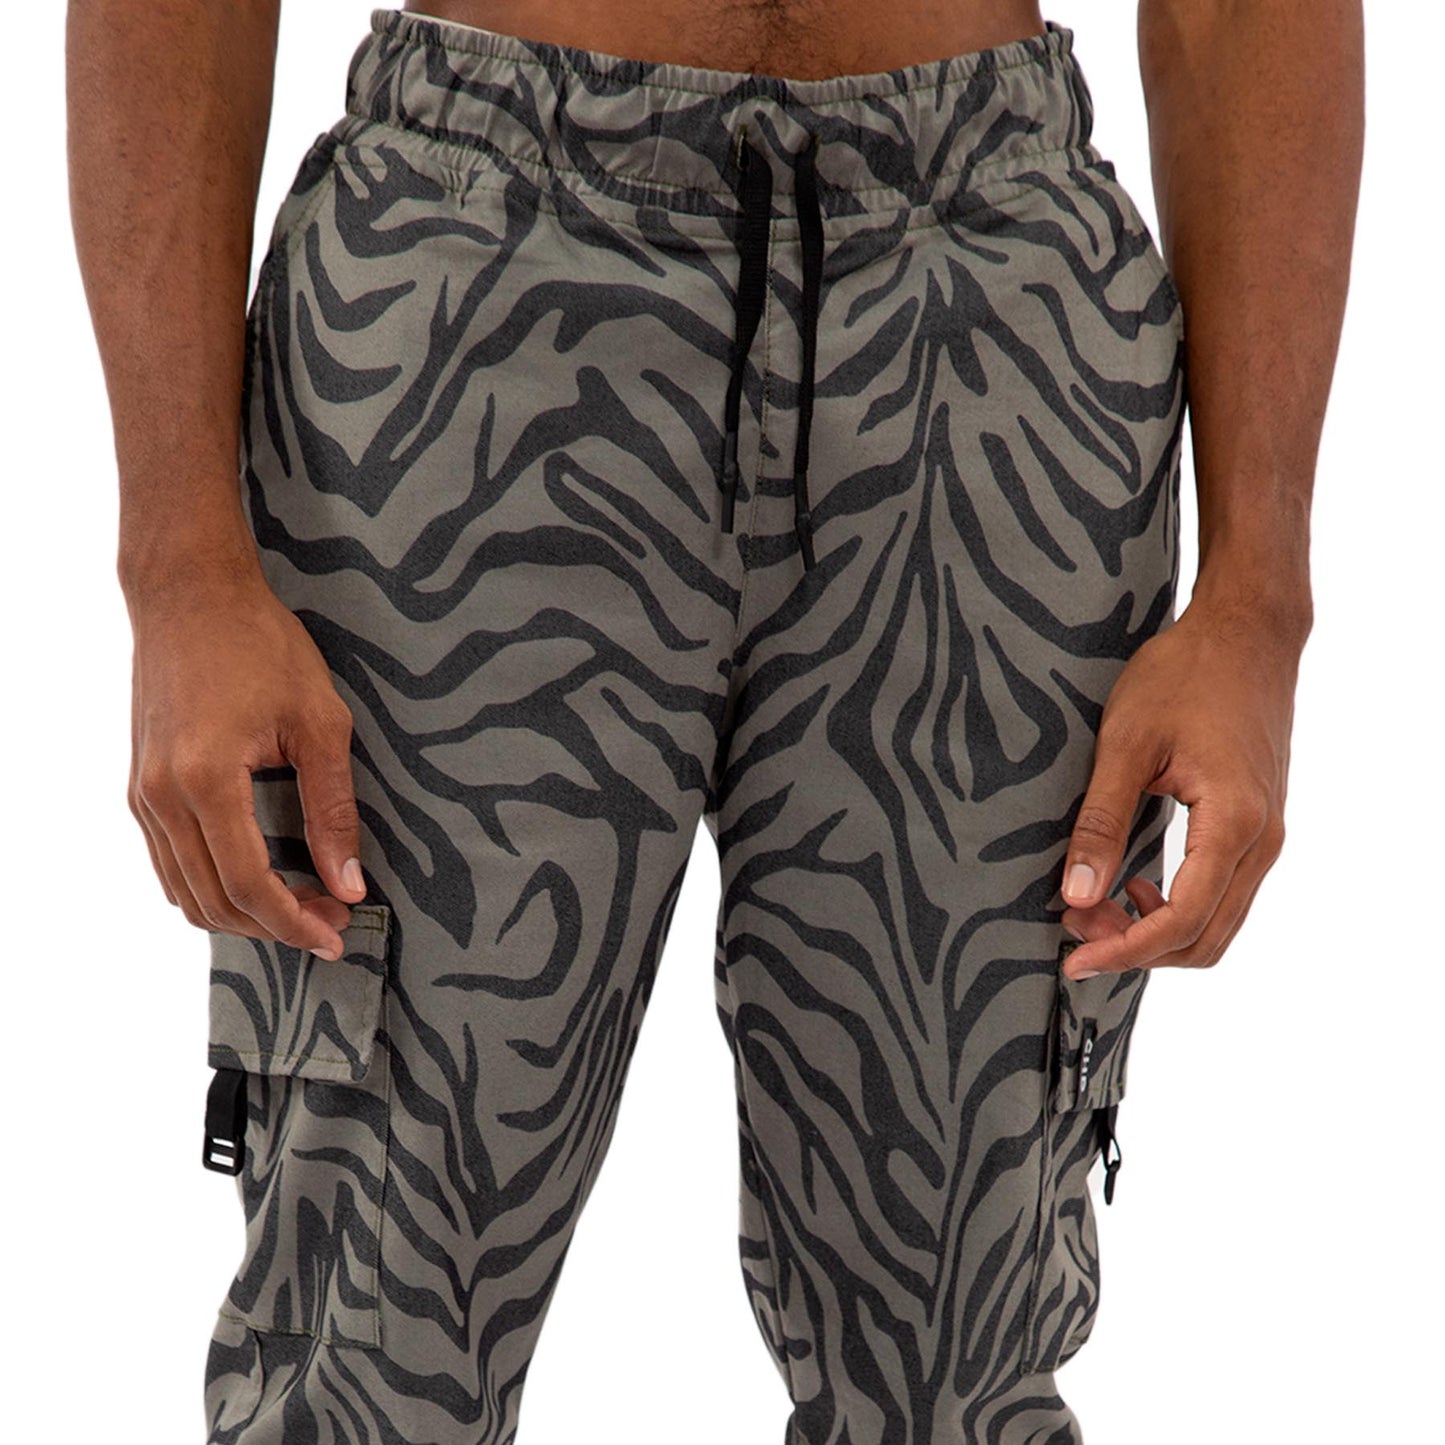 Wild zebra cammo Double Cargo Pants Unisex color: Green Gray 8121